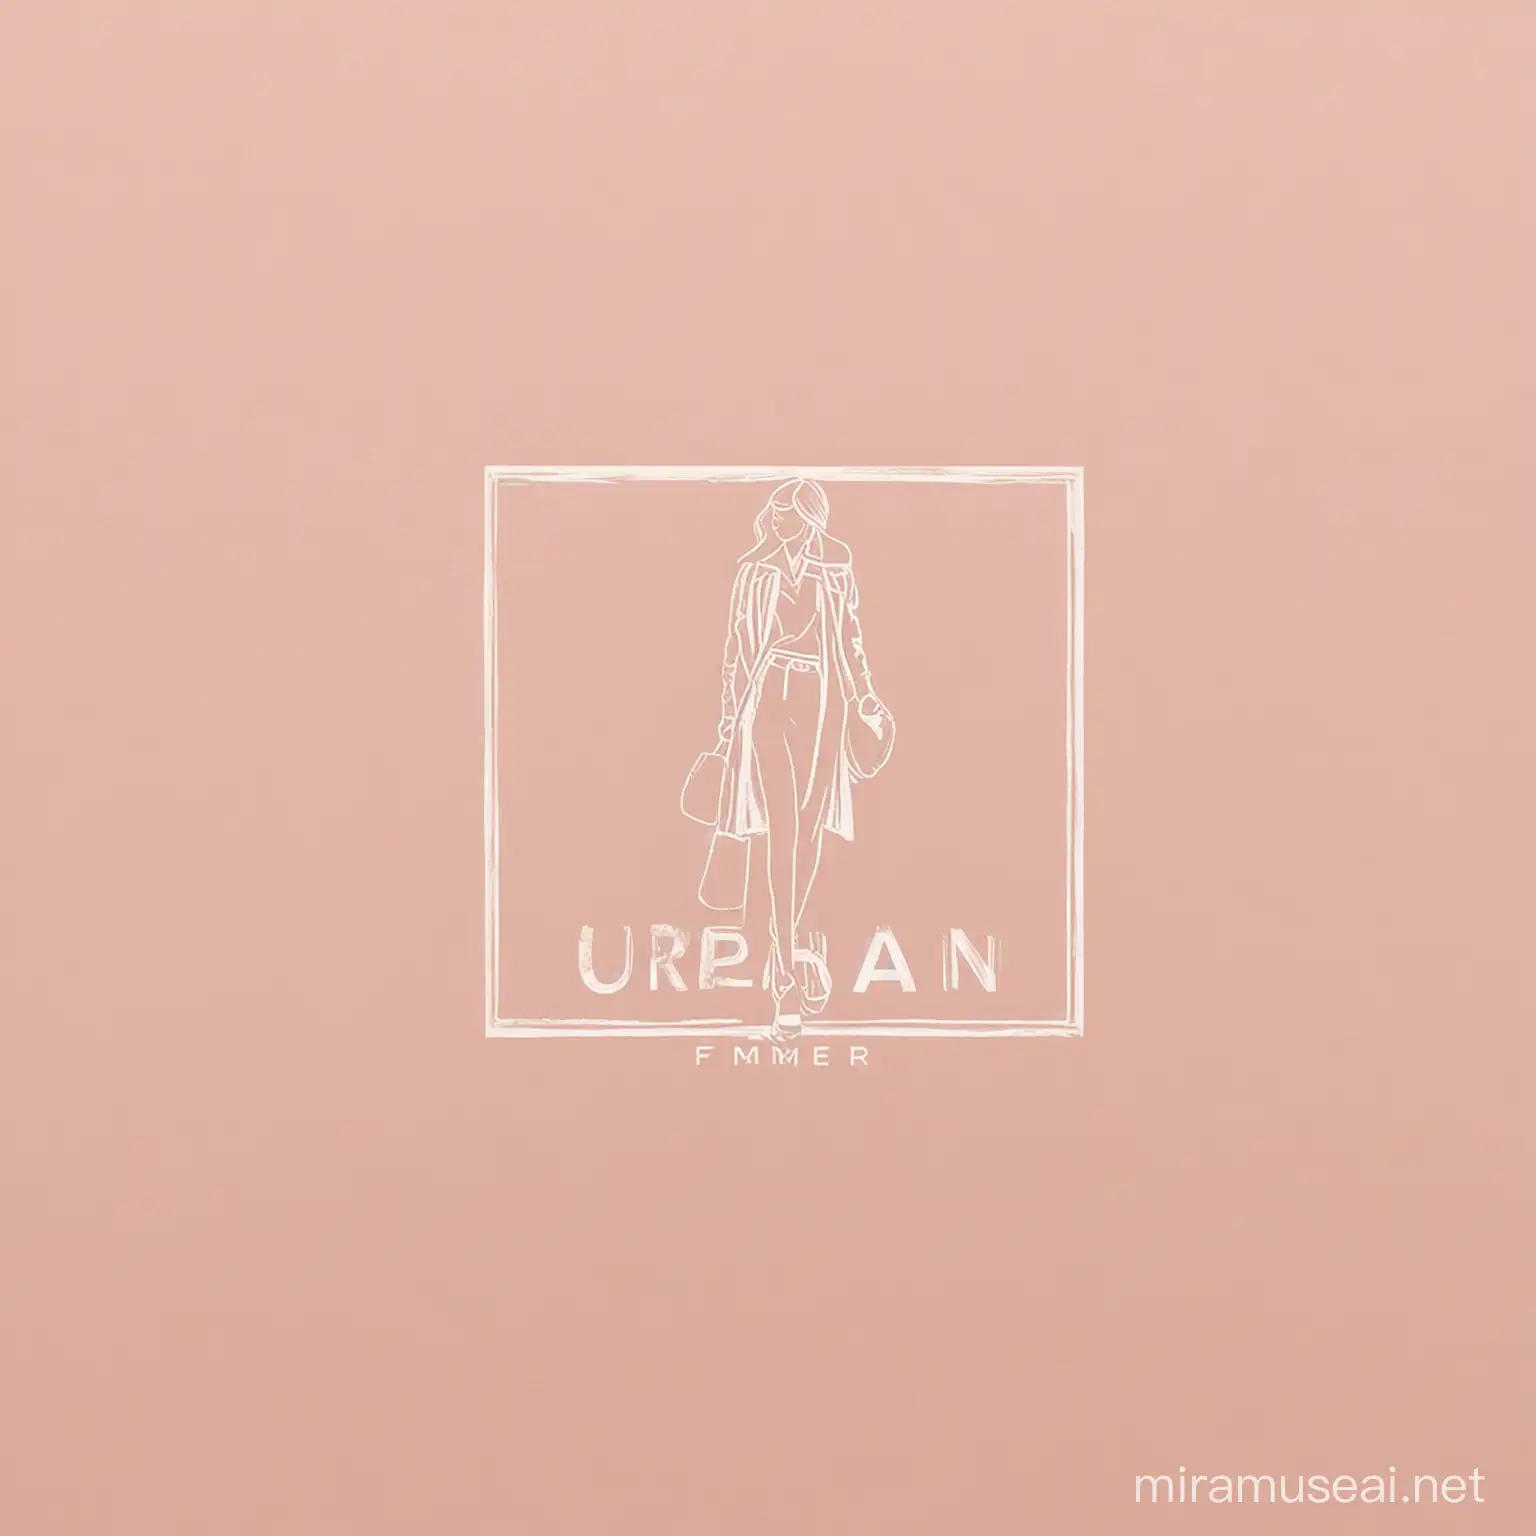 Chic Urban Femme Fashion Logo Design in Soft Pastels